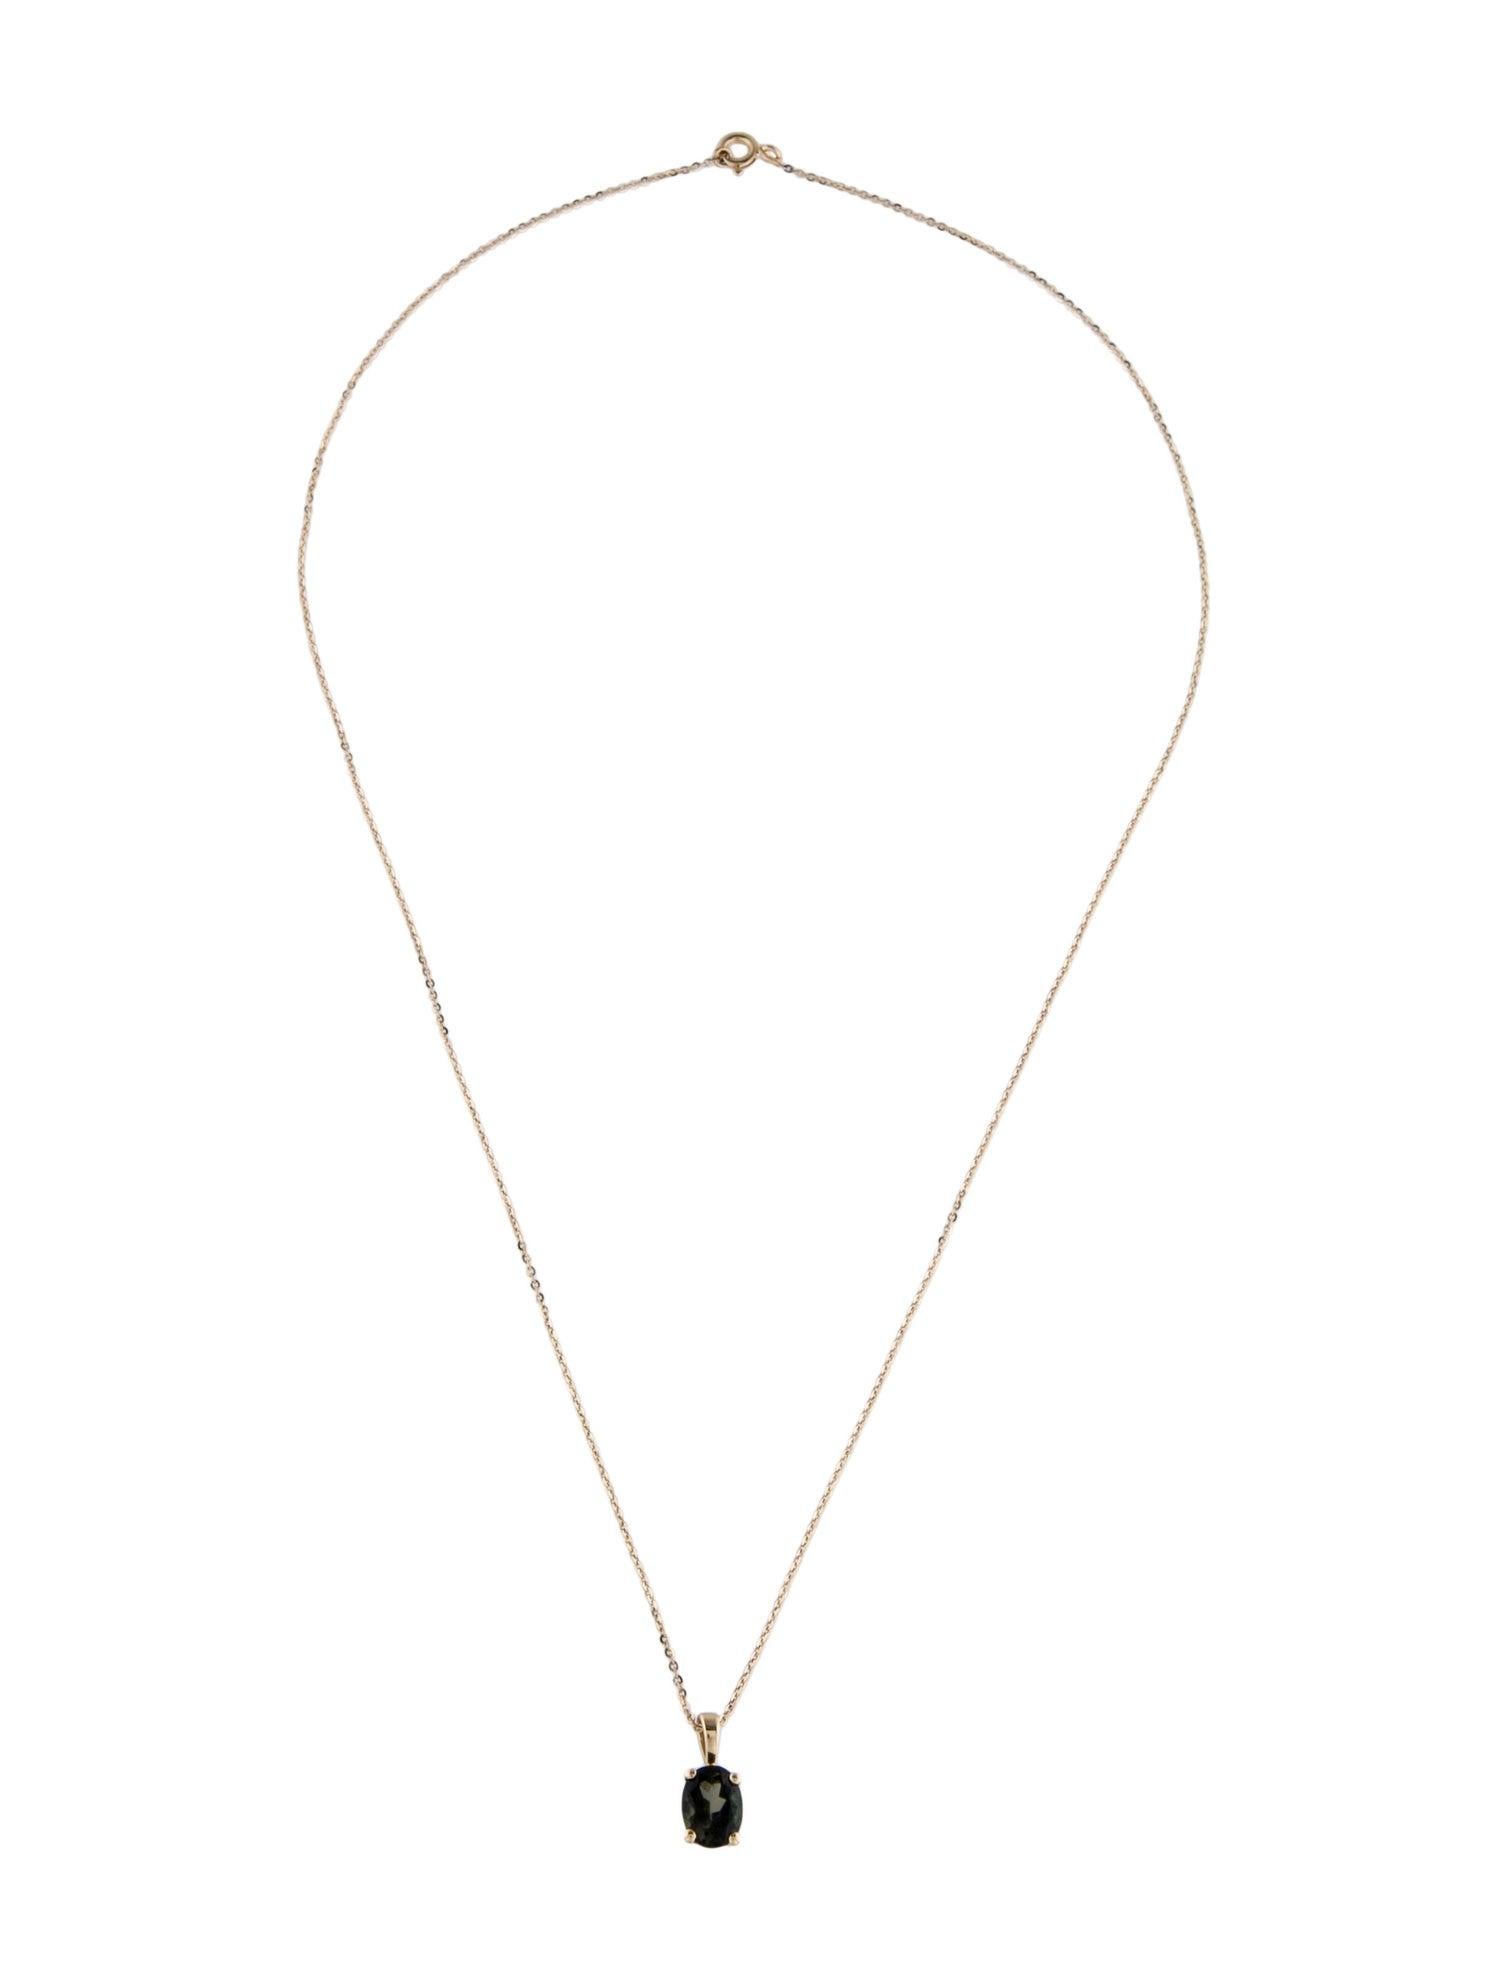 Women's 14K 1.27ctw Tourmaline Pendant Necklace - Exquisite Gemstone Statement Piece For Sale